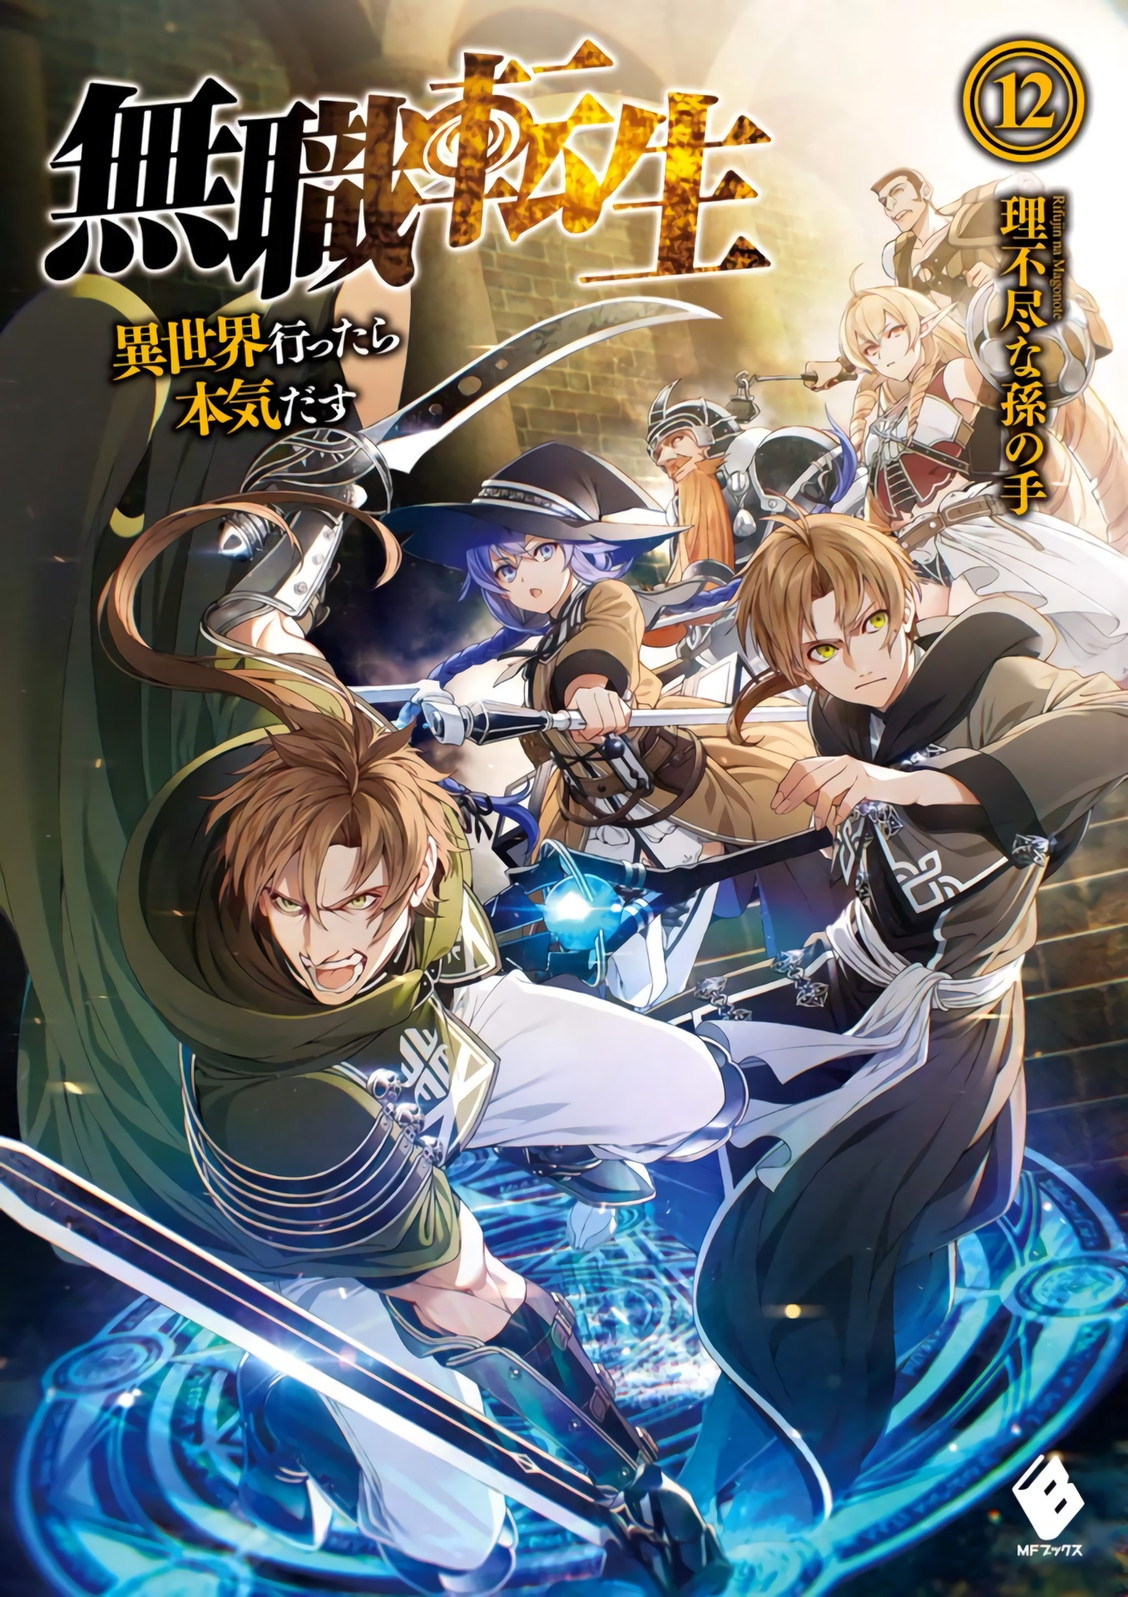 Light Novel Volume 12 | Mushoku Tensei Wiki | Fandom